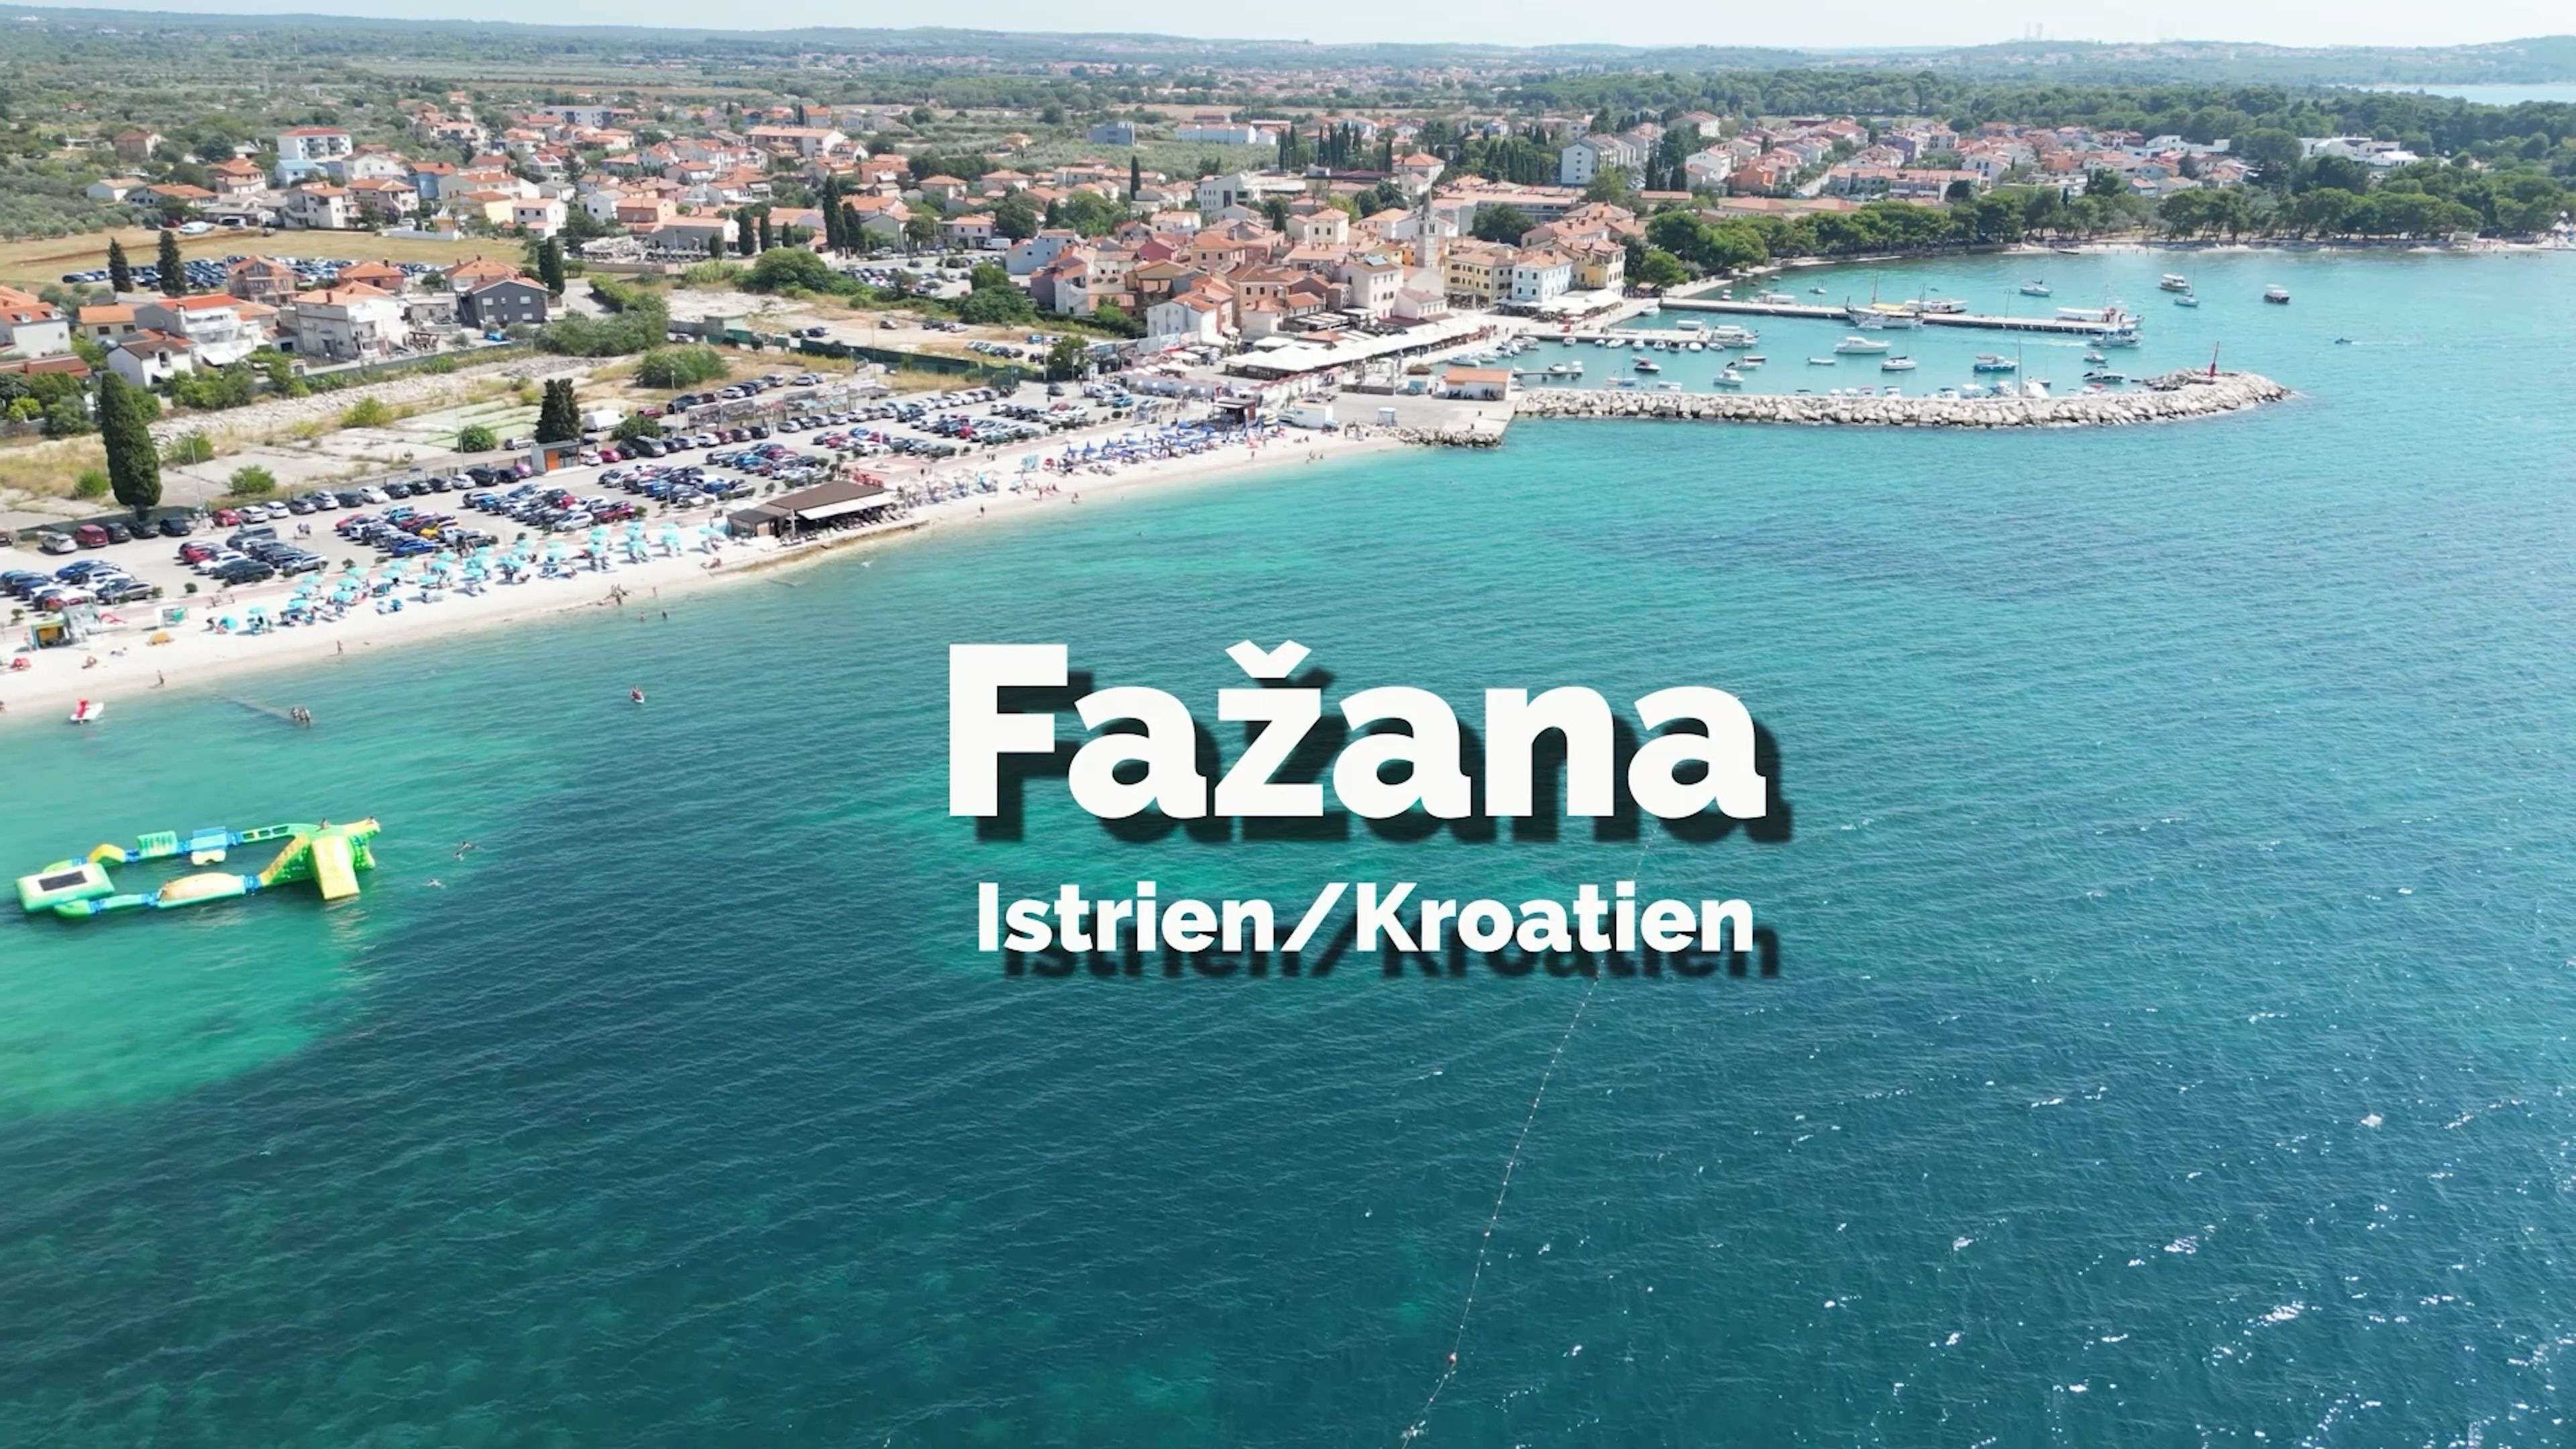 Fancy a vacation? Fancy a trip to Croatia? How about Fažana on the Istrian peninsula?